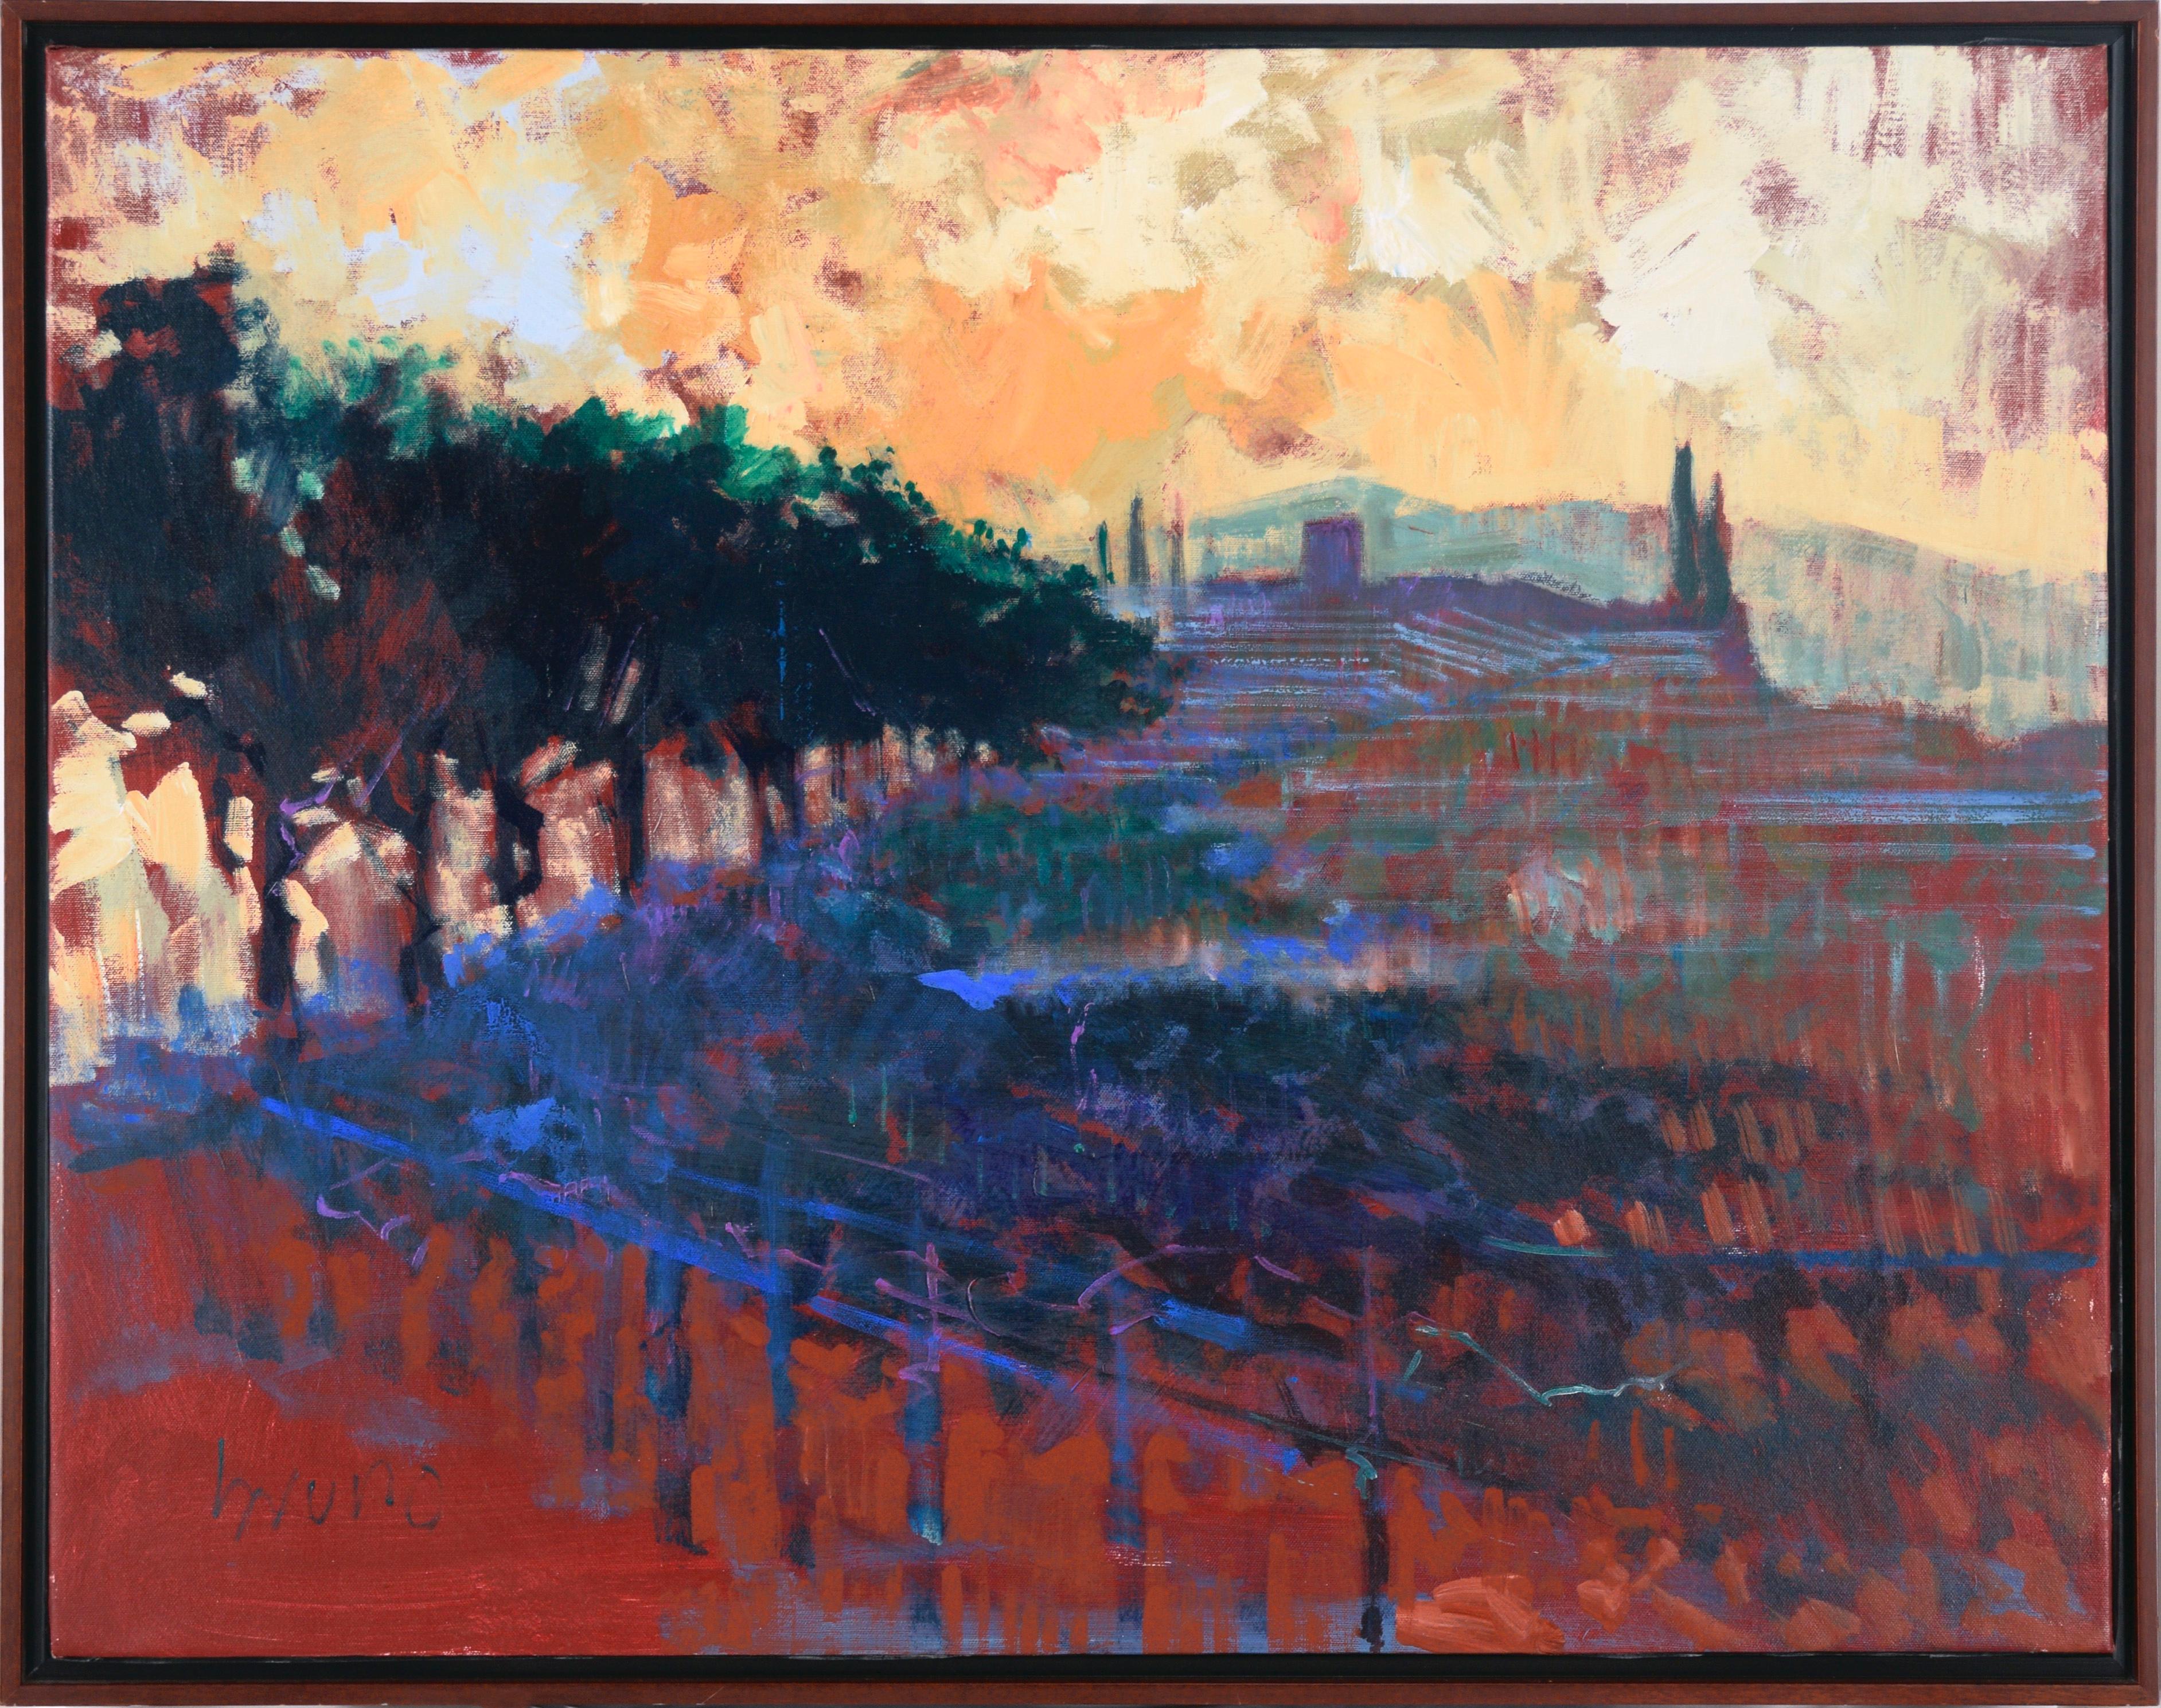 Bruno Segatta Landscape Painting - Fauvist Italian Countryside - Plein Air in Oil on Canvas